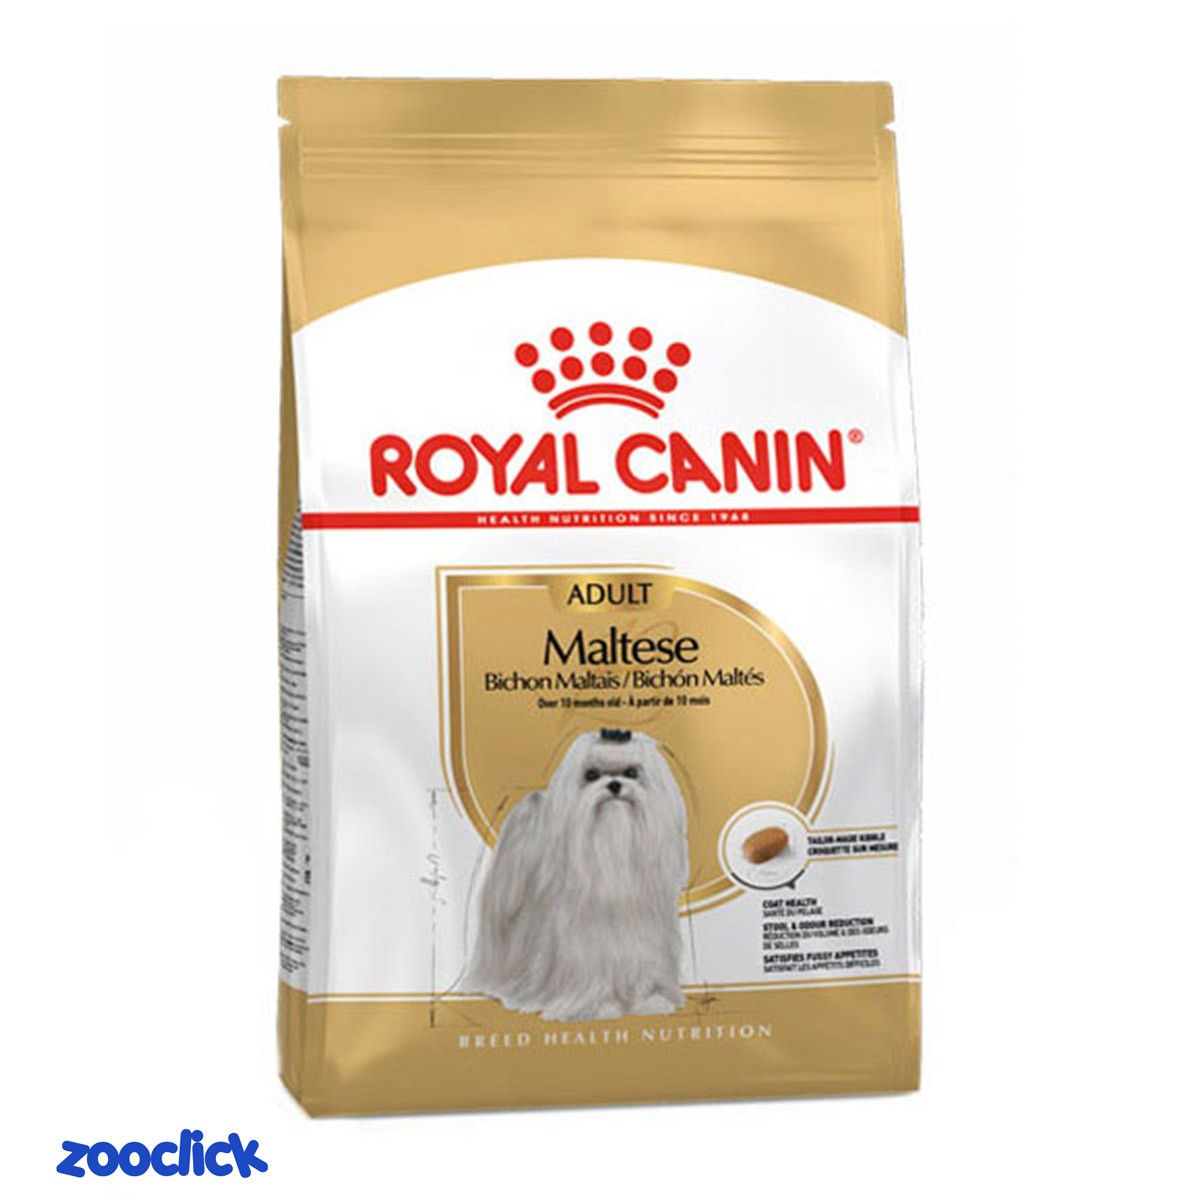 royal canin maltese adult غذای خشک سگ بالغ نژاد مالتیز رویال کنین